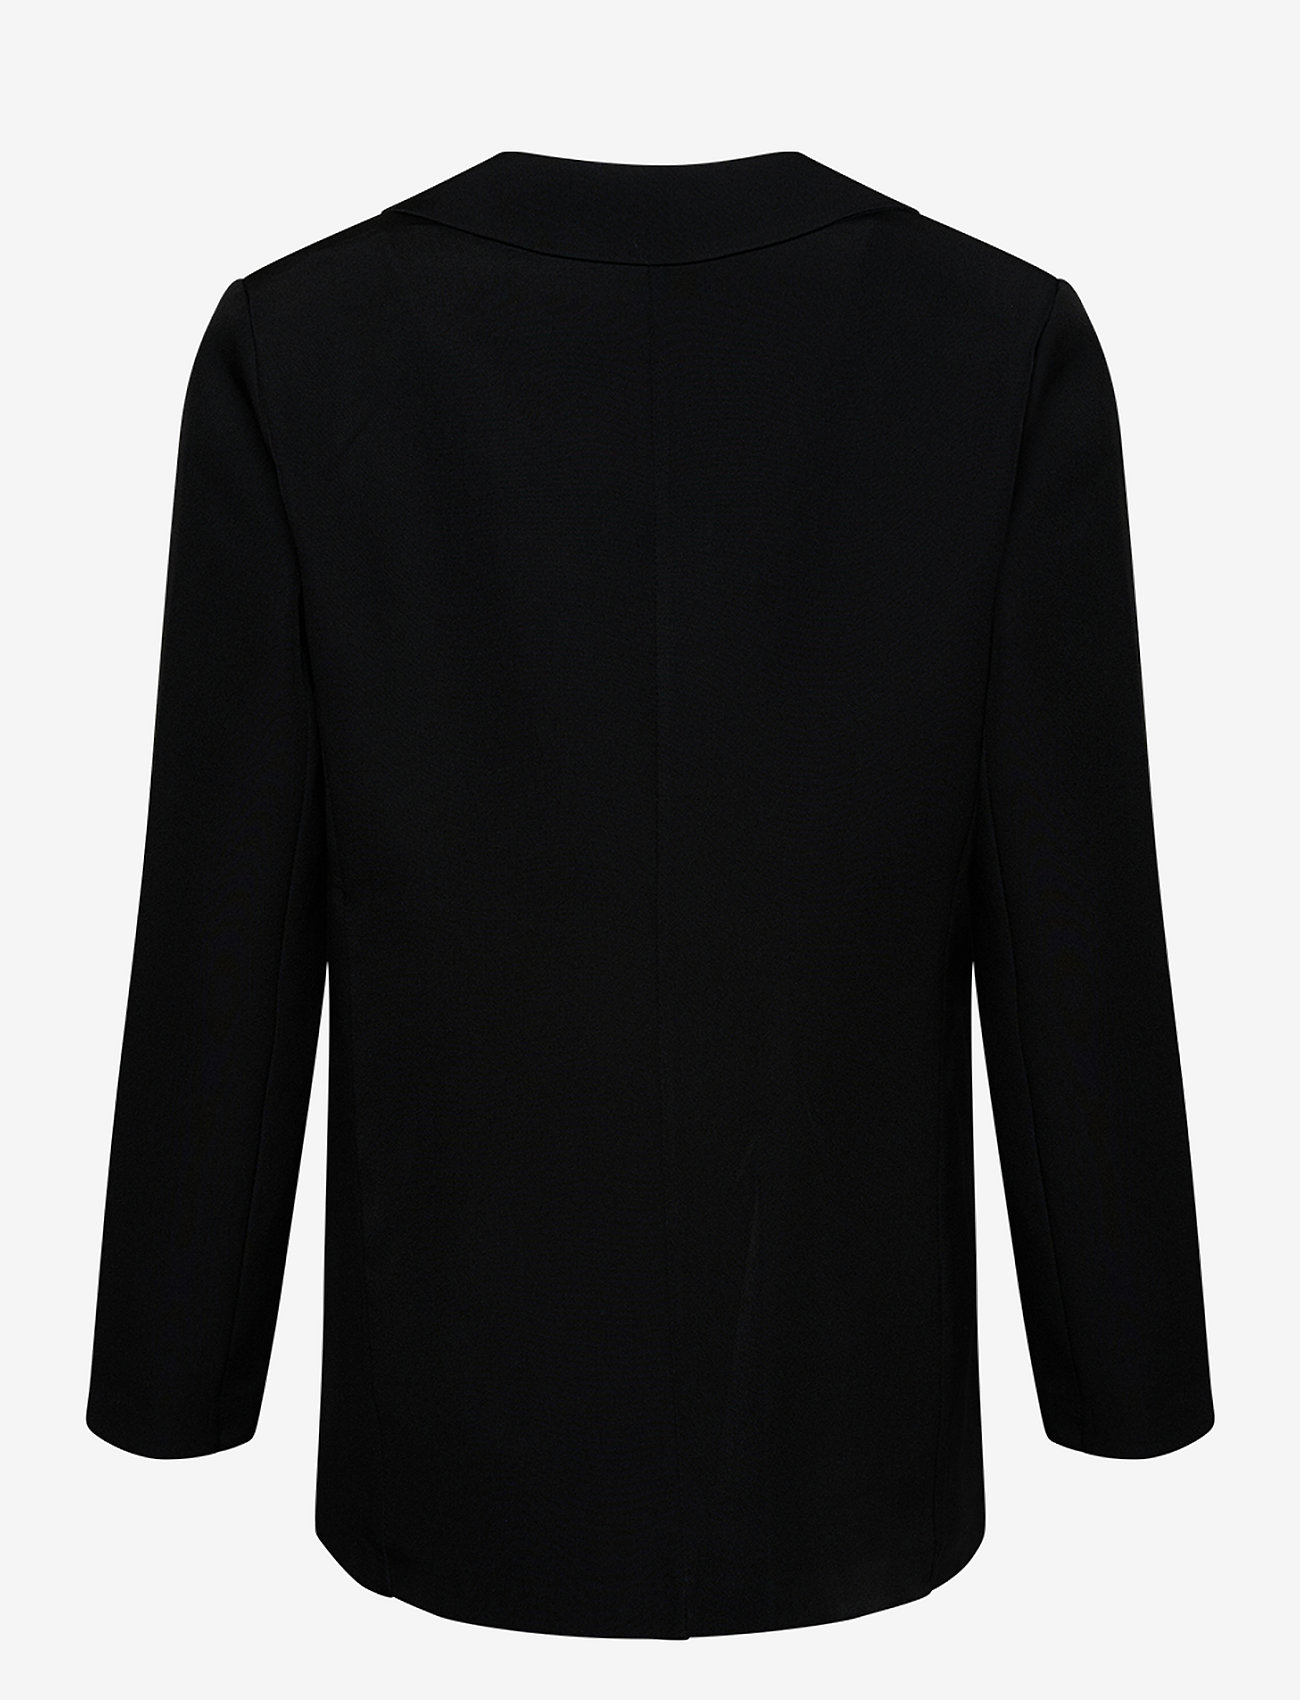 Noella - Forte Blazer 22 - ballīšu apģērbs par outlet cenām - black - 1